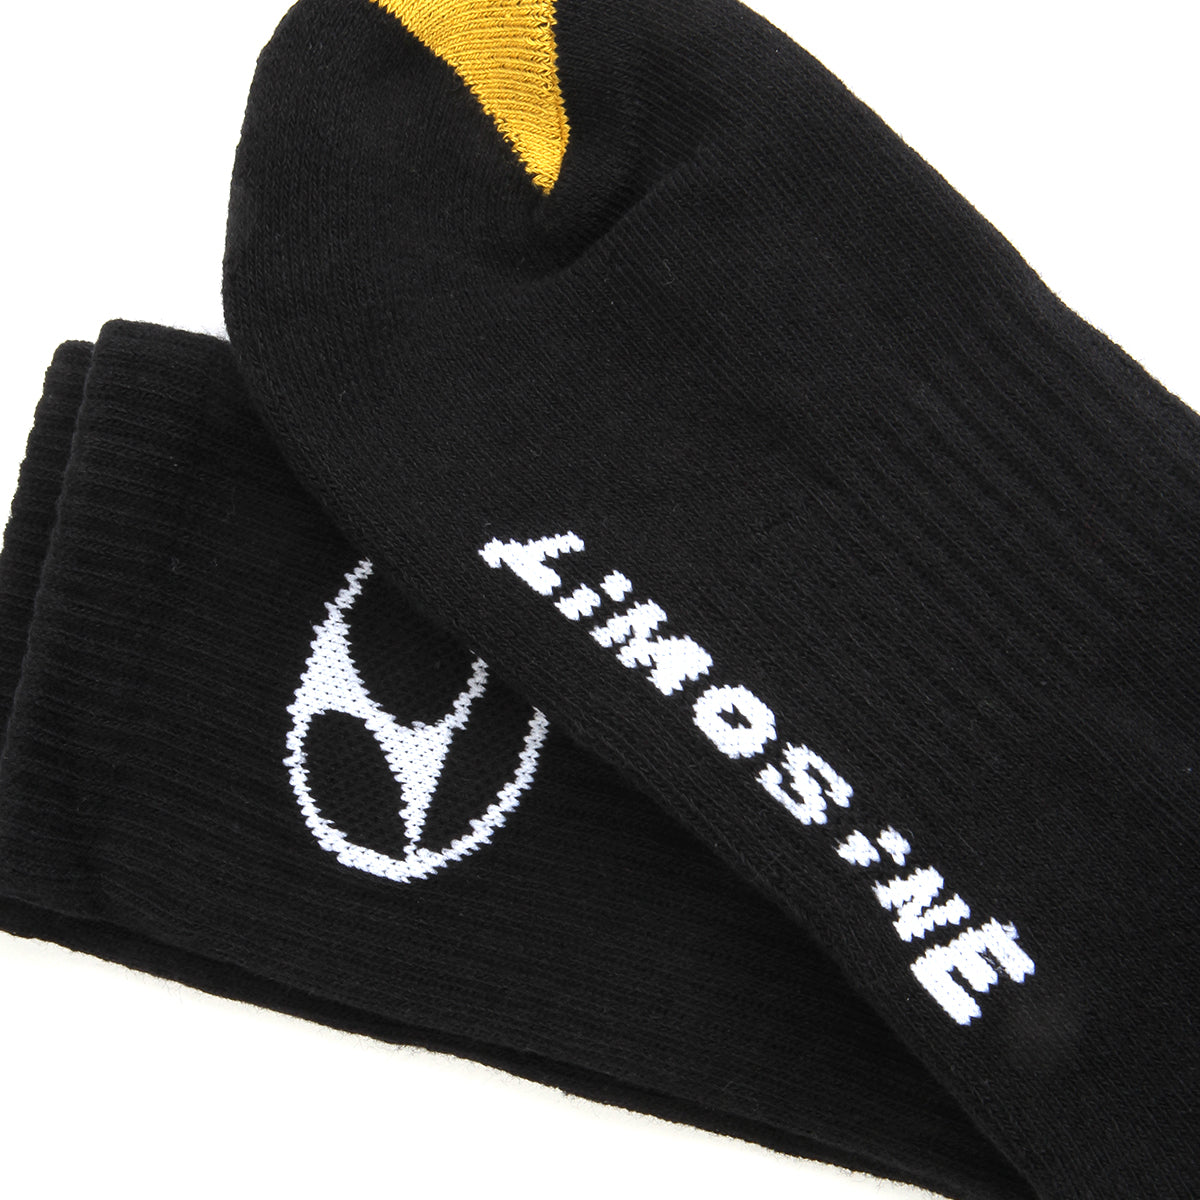 Limosine | Limo Gold Toe Socks Black